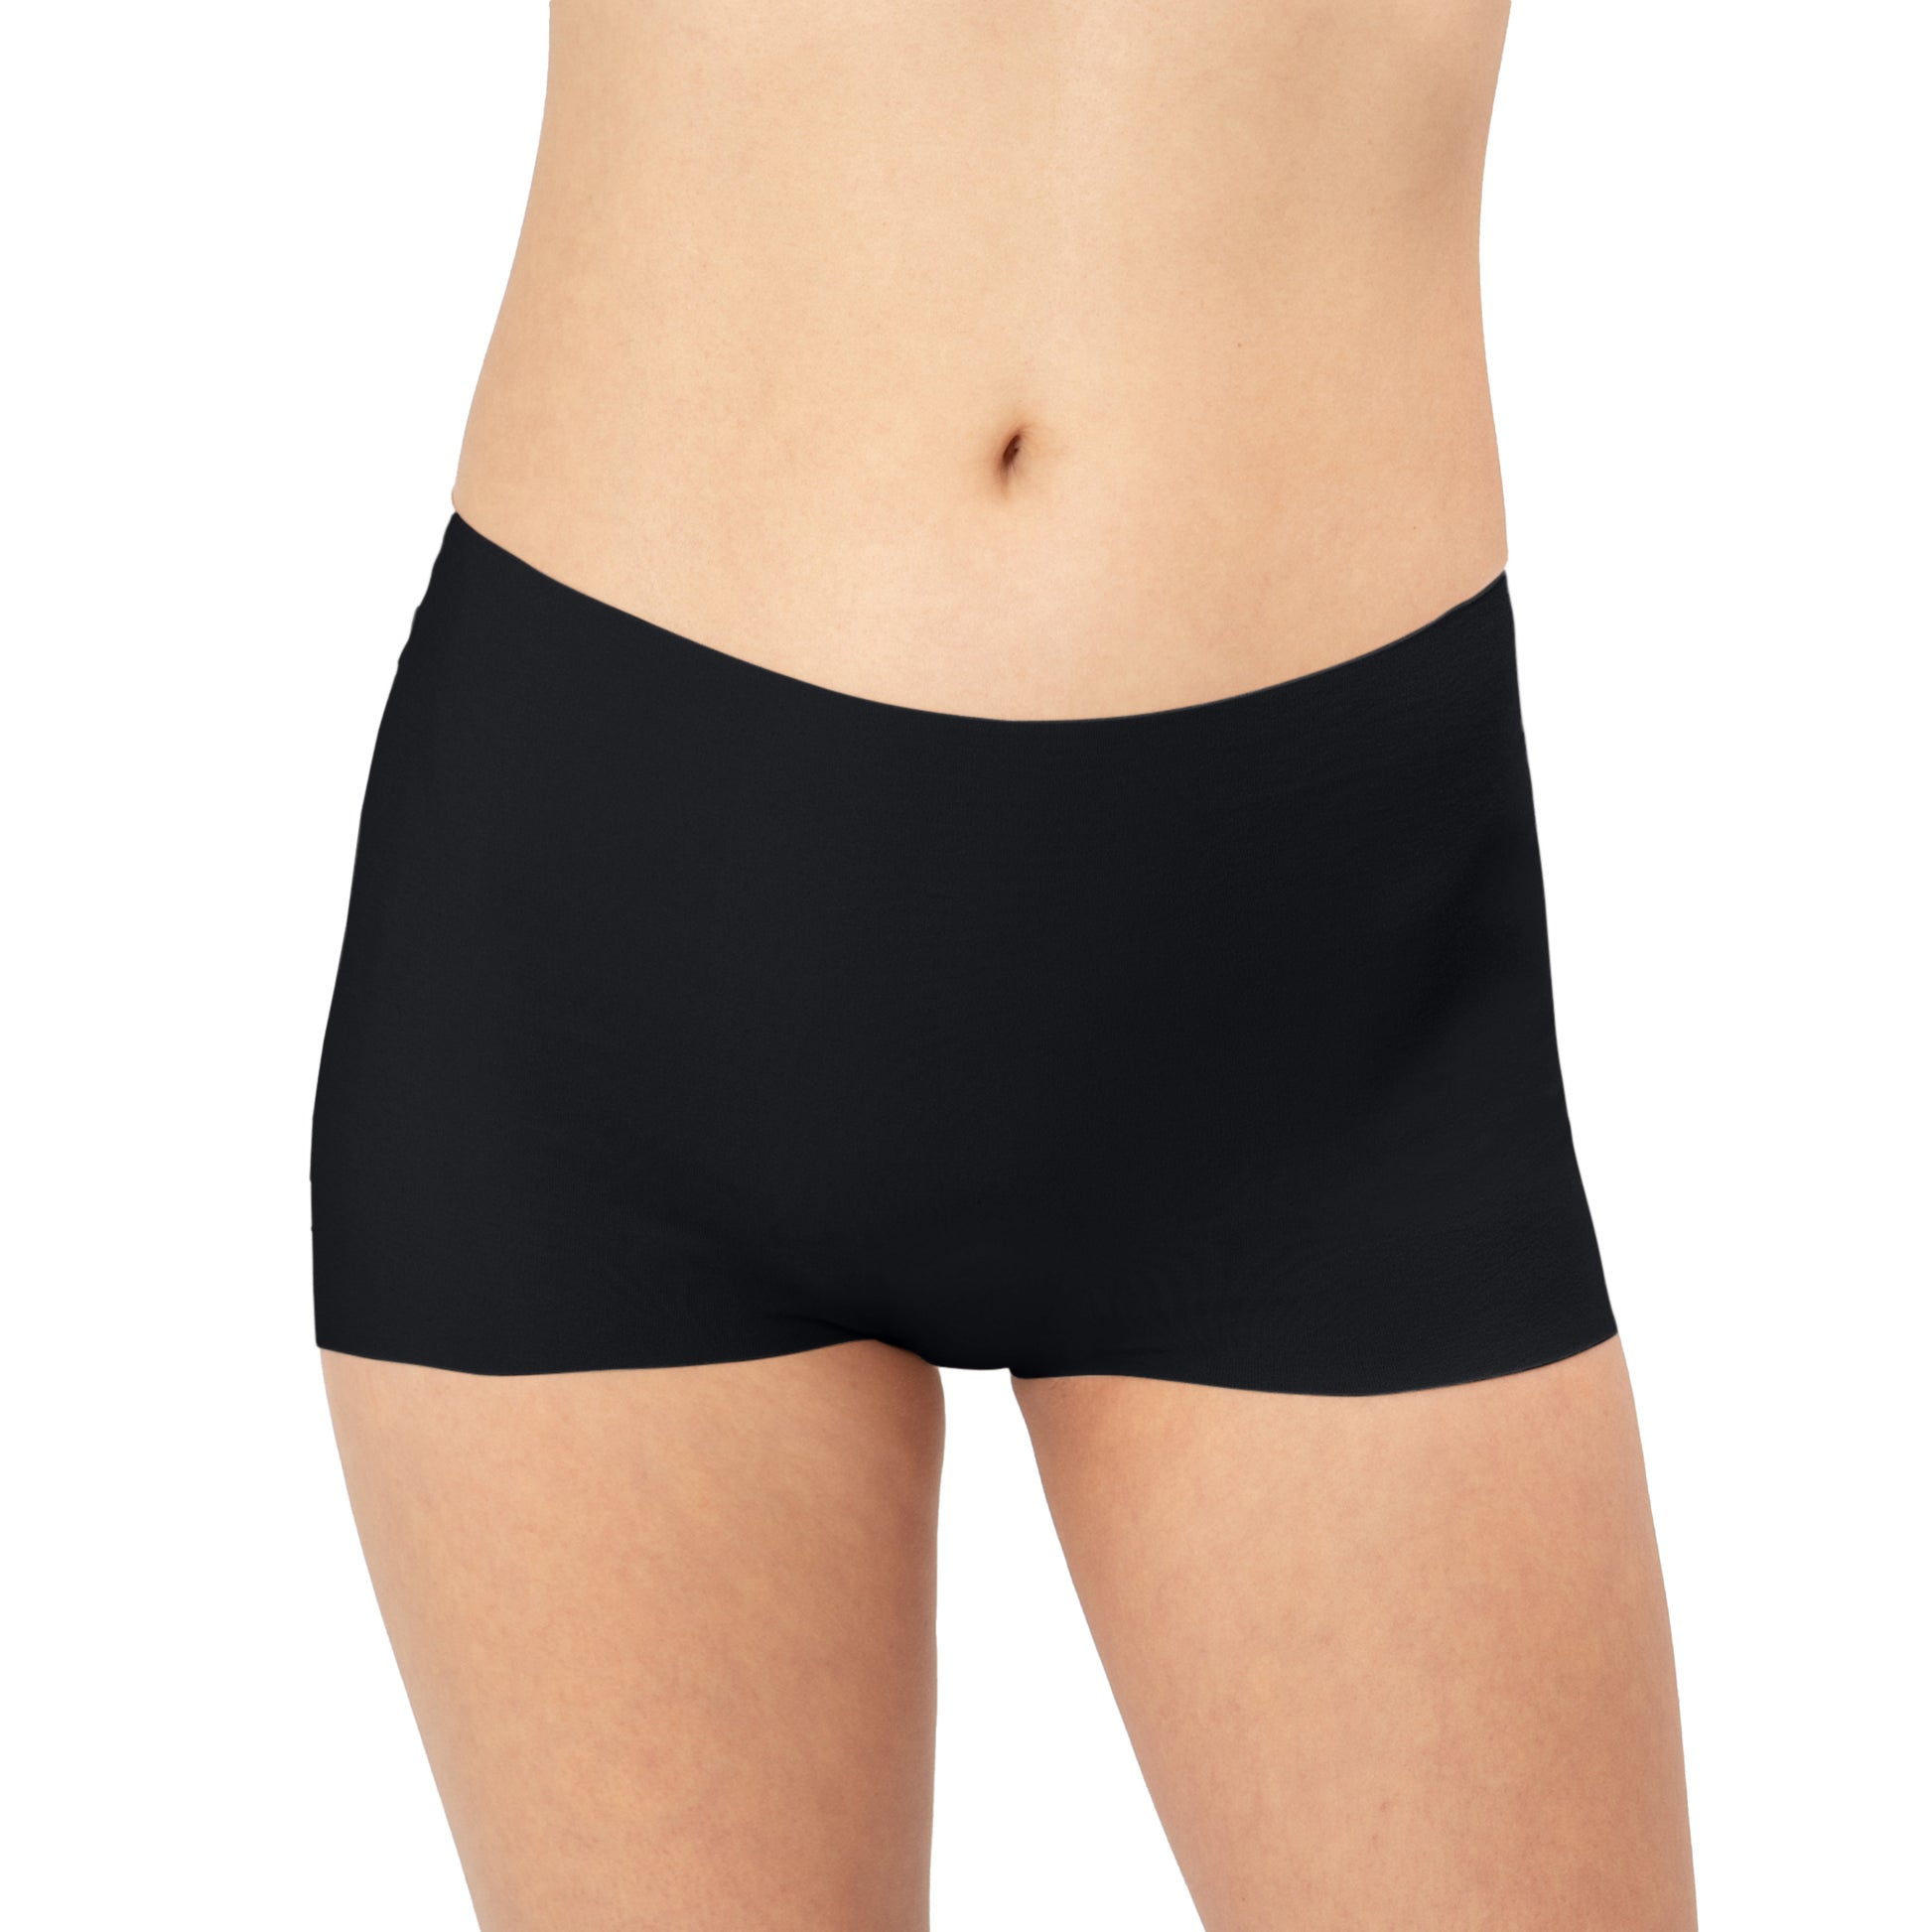 Women's Organic Cotton Shortie Underwear in color Black - Front View